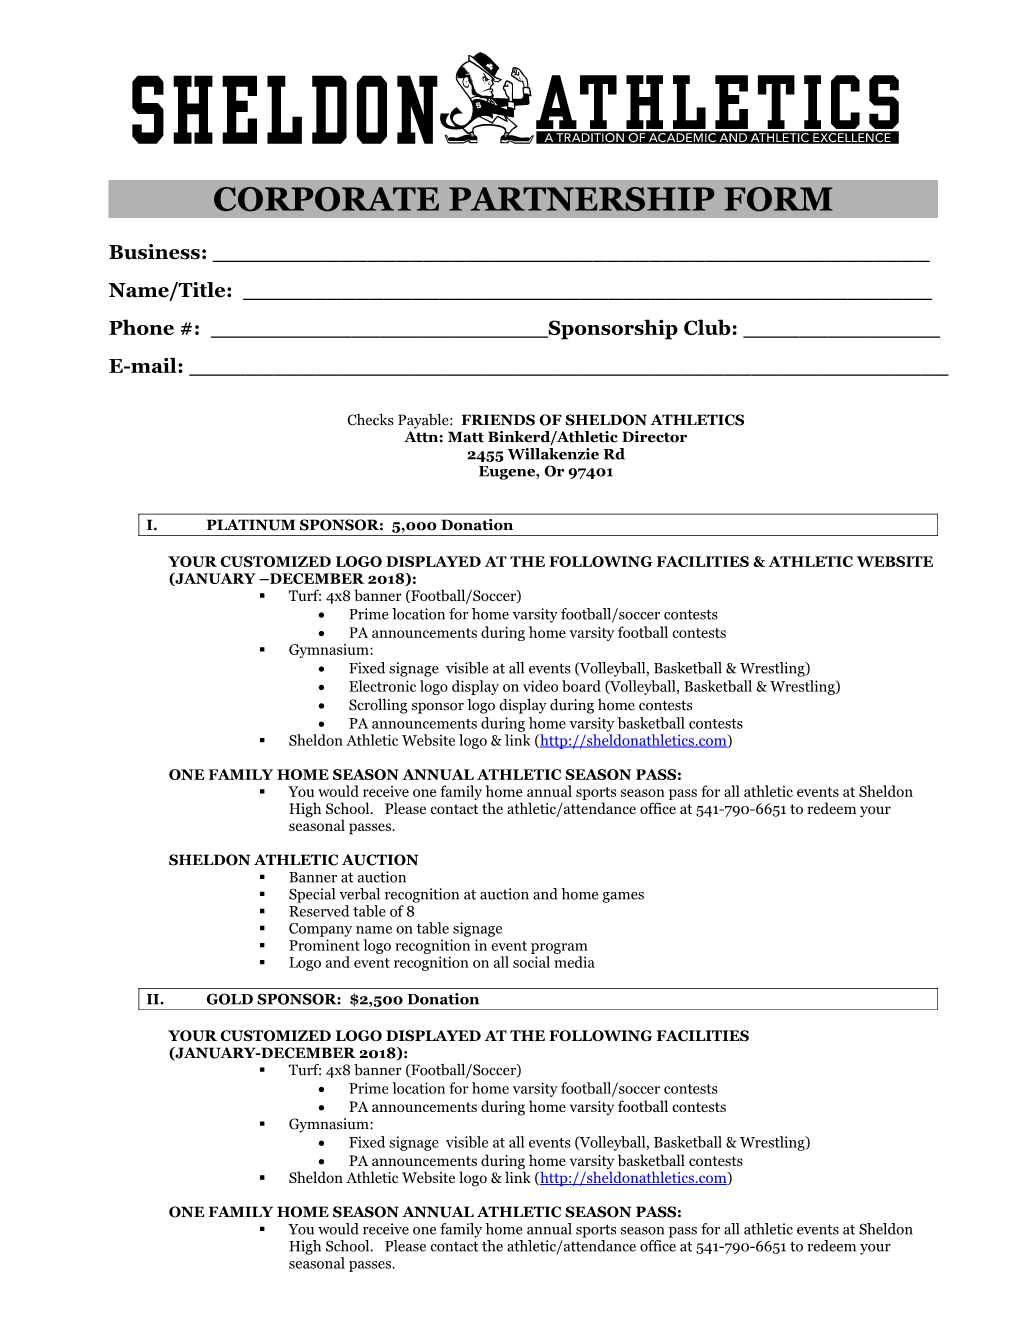 Corporate Partnership Form